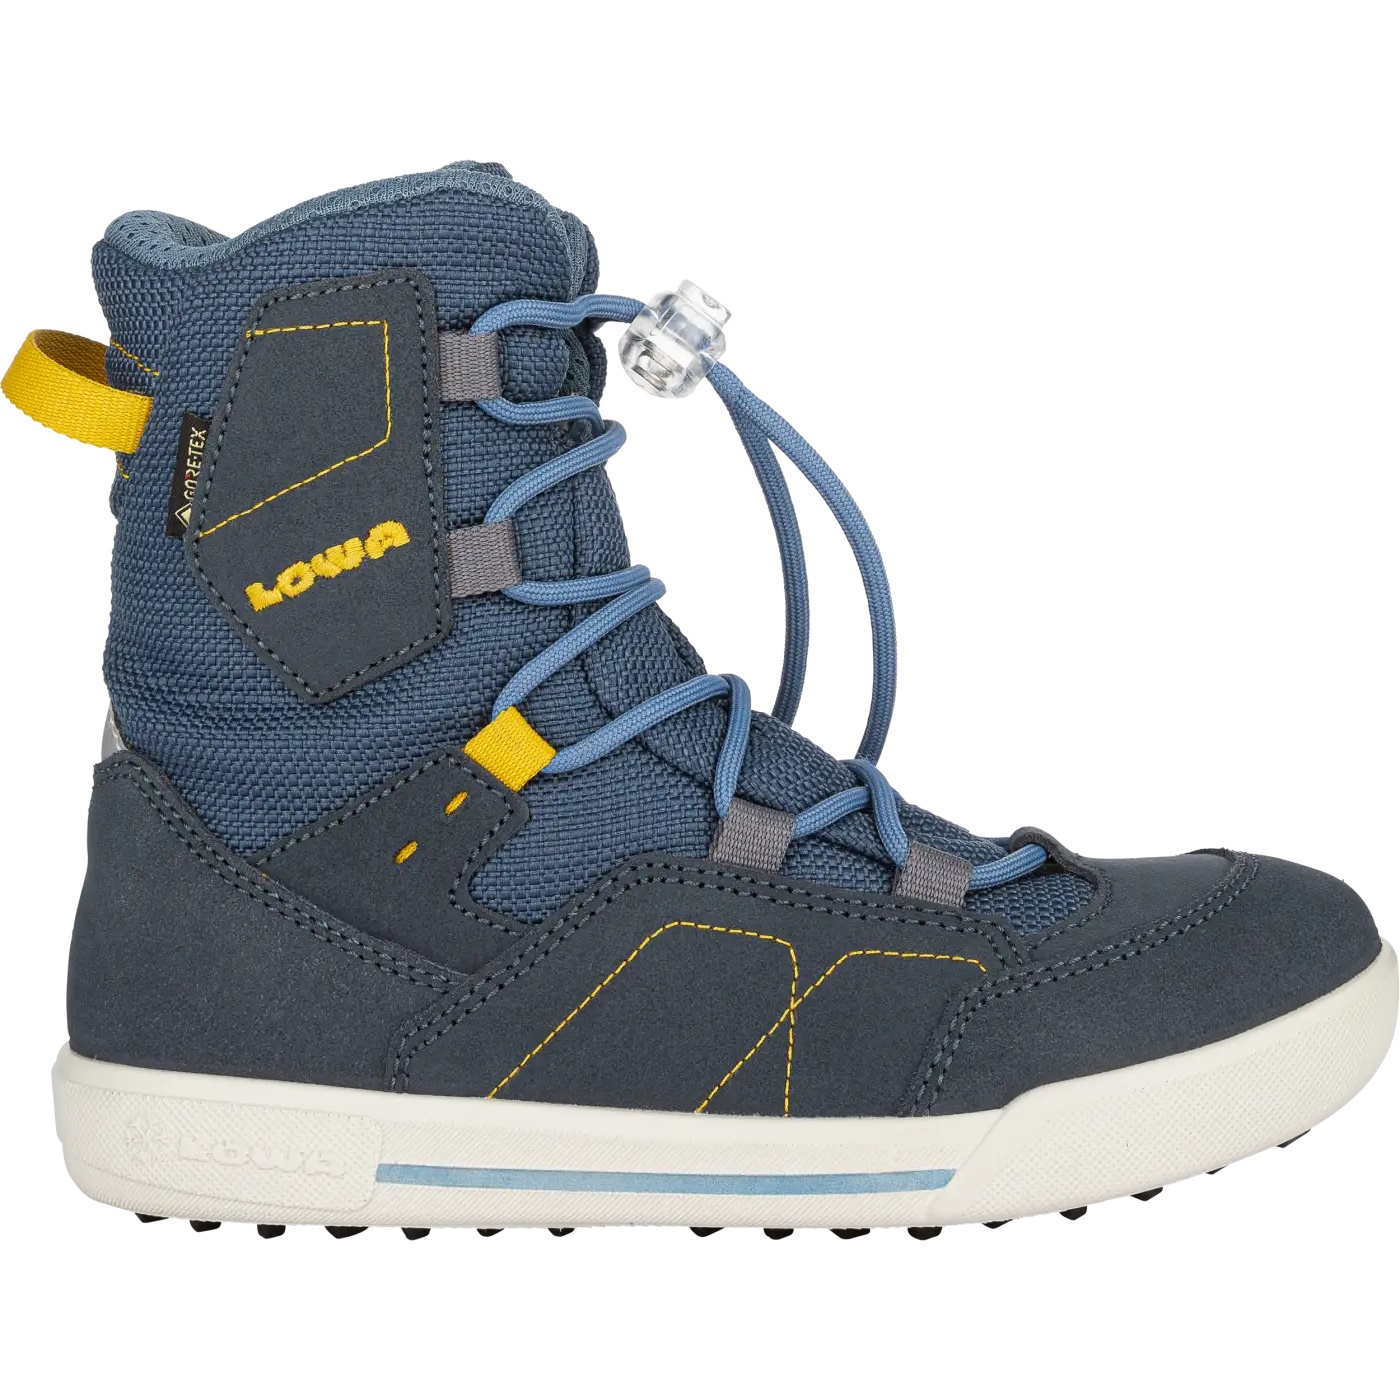 Productfoto van LOWA Raik GTX Kids Winter Boots (Size 25-35) - dark blue/denim